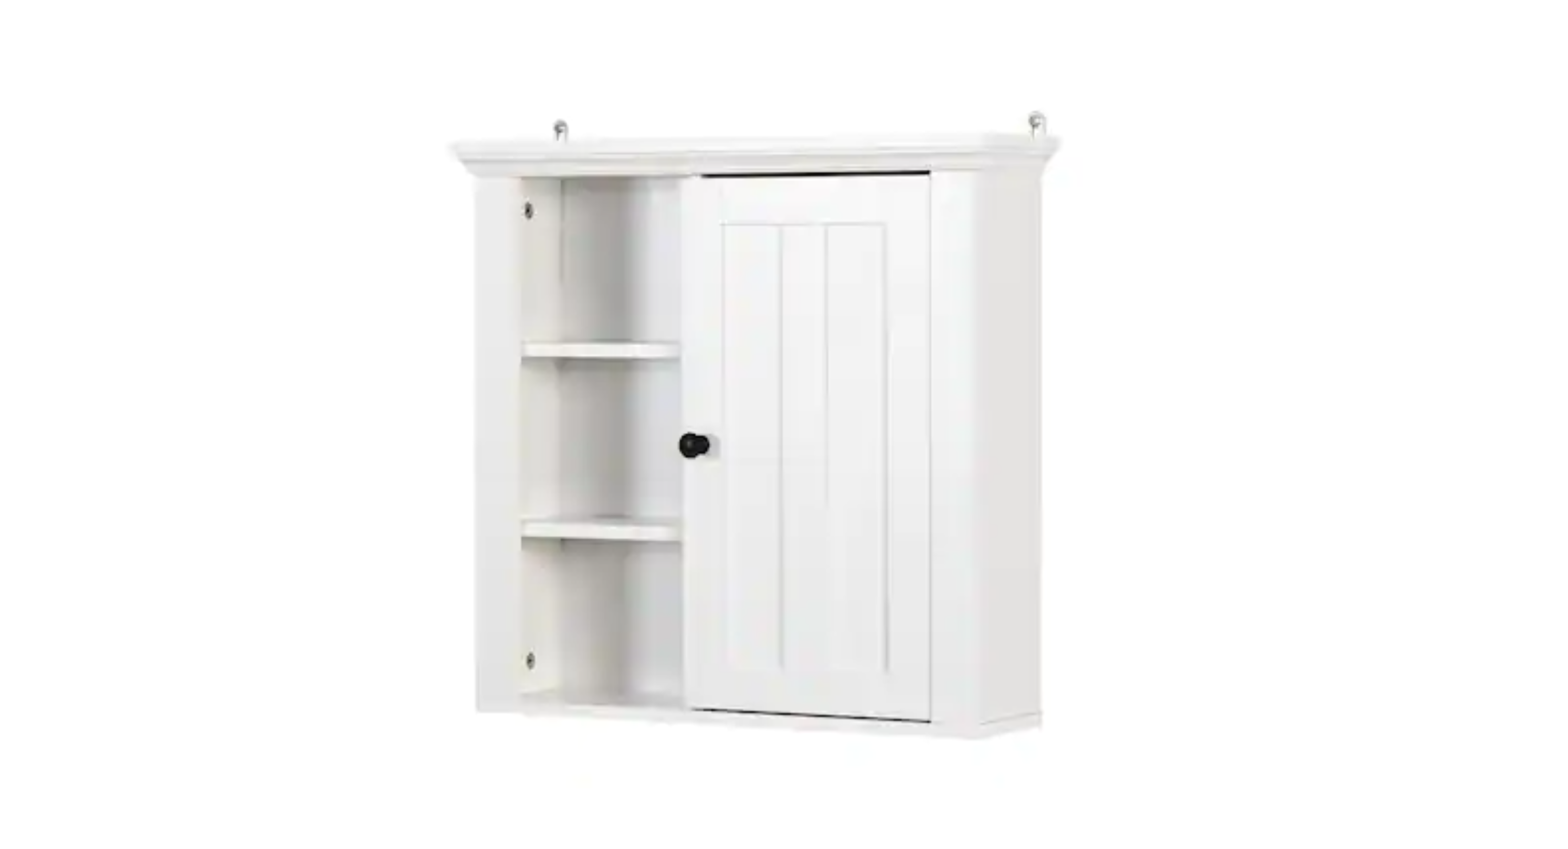 THE HOME DEPOT MVBC05 Bathroom Wall Cabinet with 5 Shelf Instruction Manual